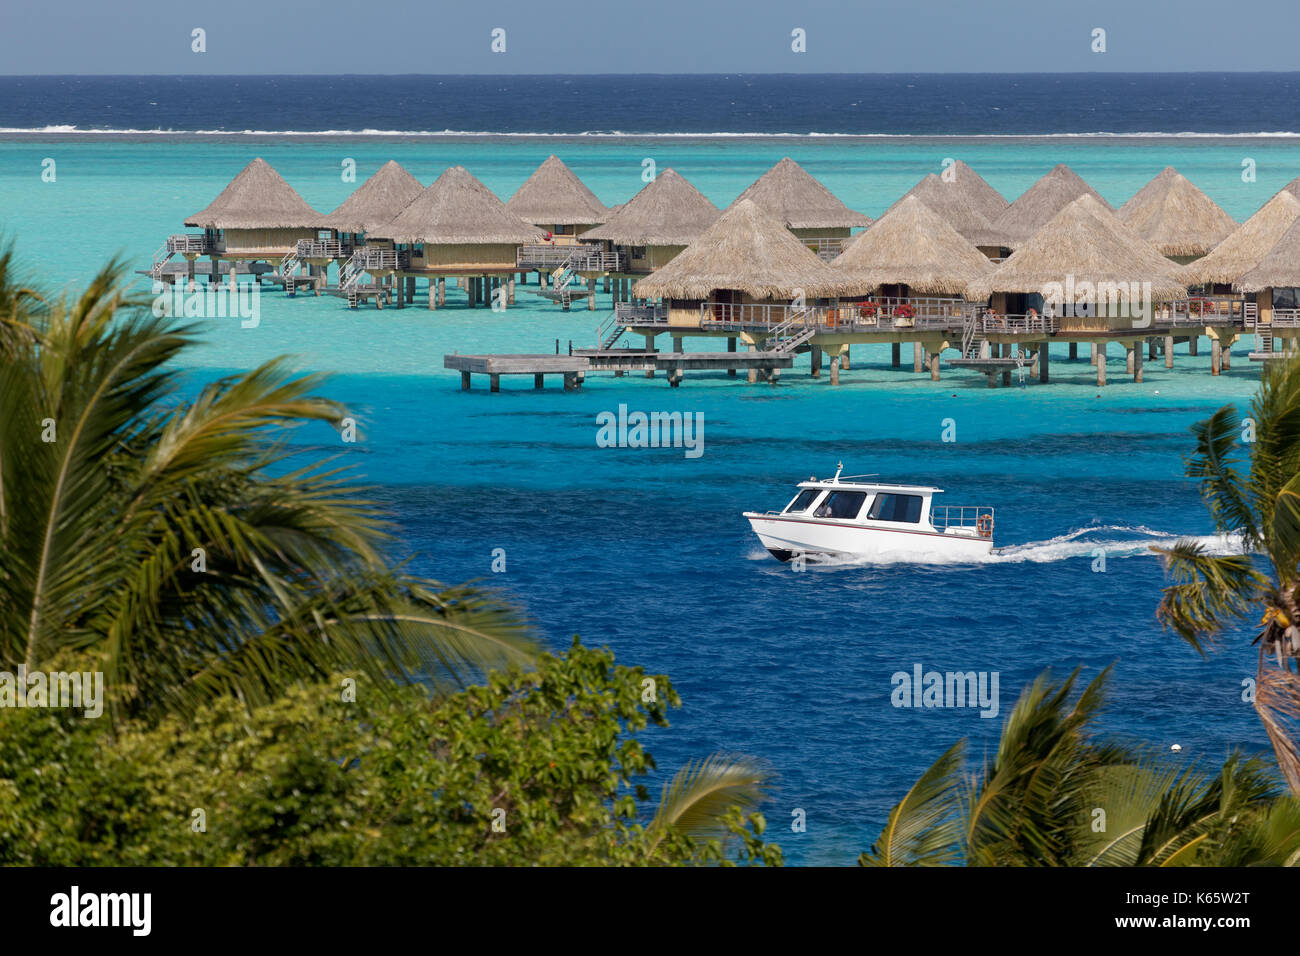 Motorboat, bungalows in the turquoise sea, resort Sofitel Bora Bora, island Bora Bora, society islands, French Polynesia Stock Photo